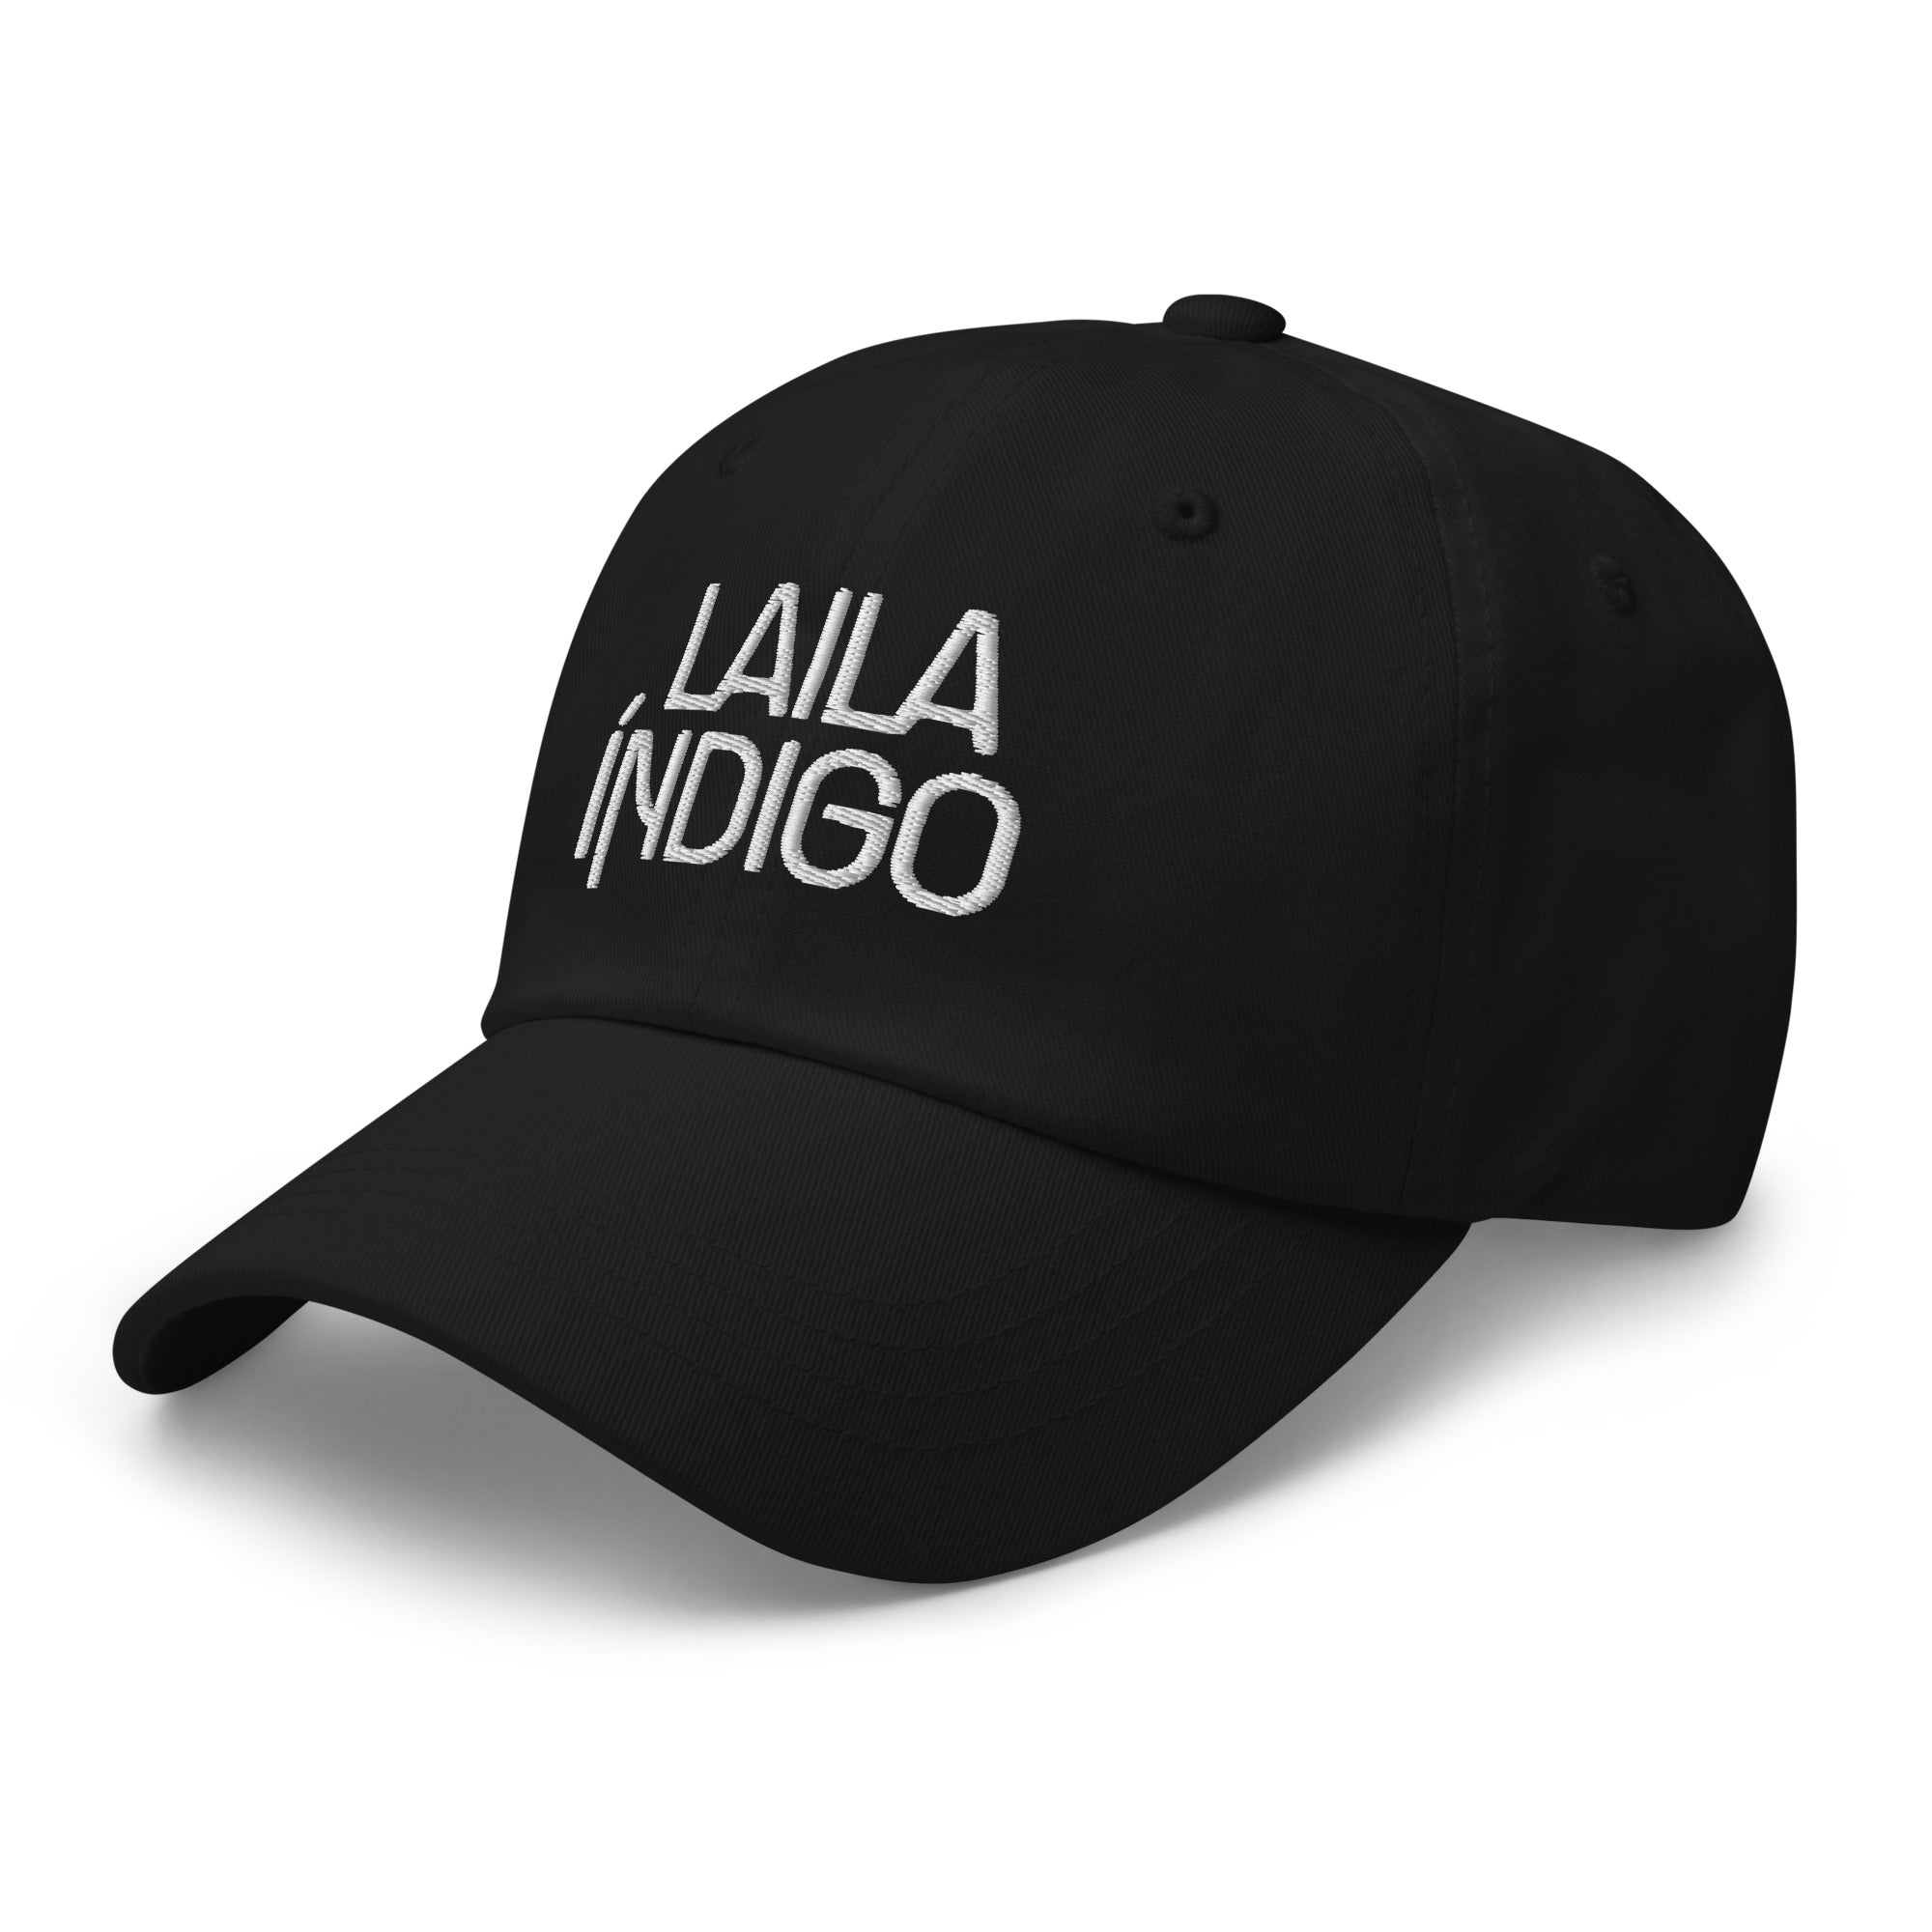 Laila Indigo - Dad hat